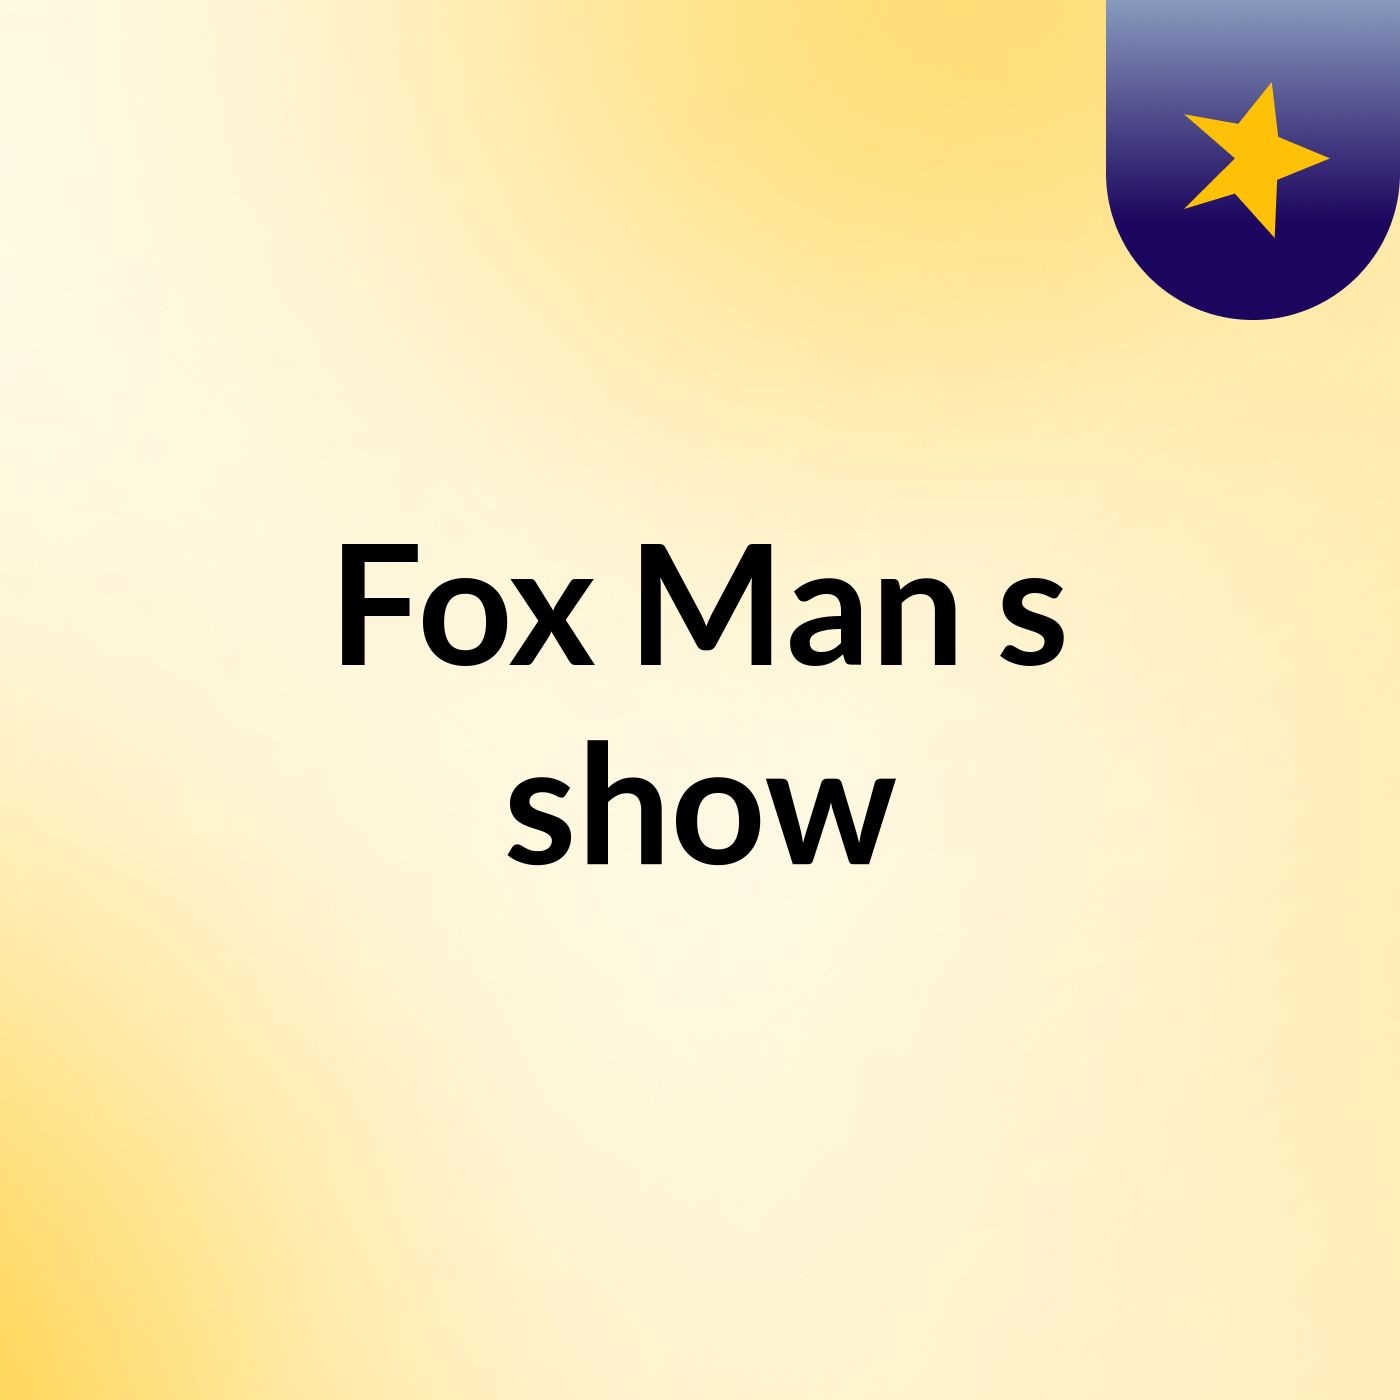 Fox Man's show